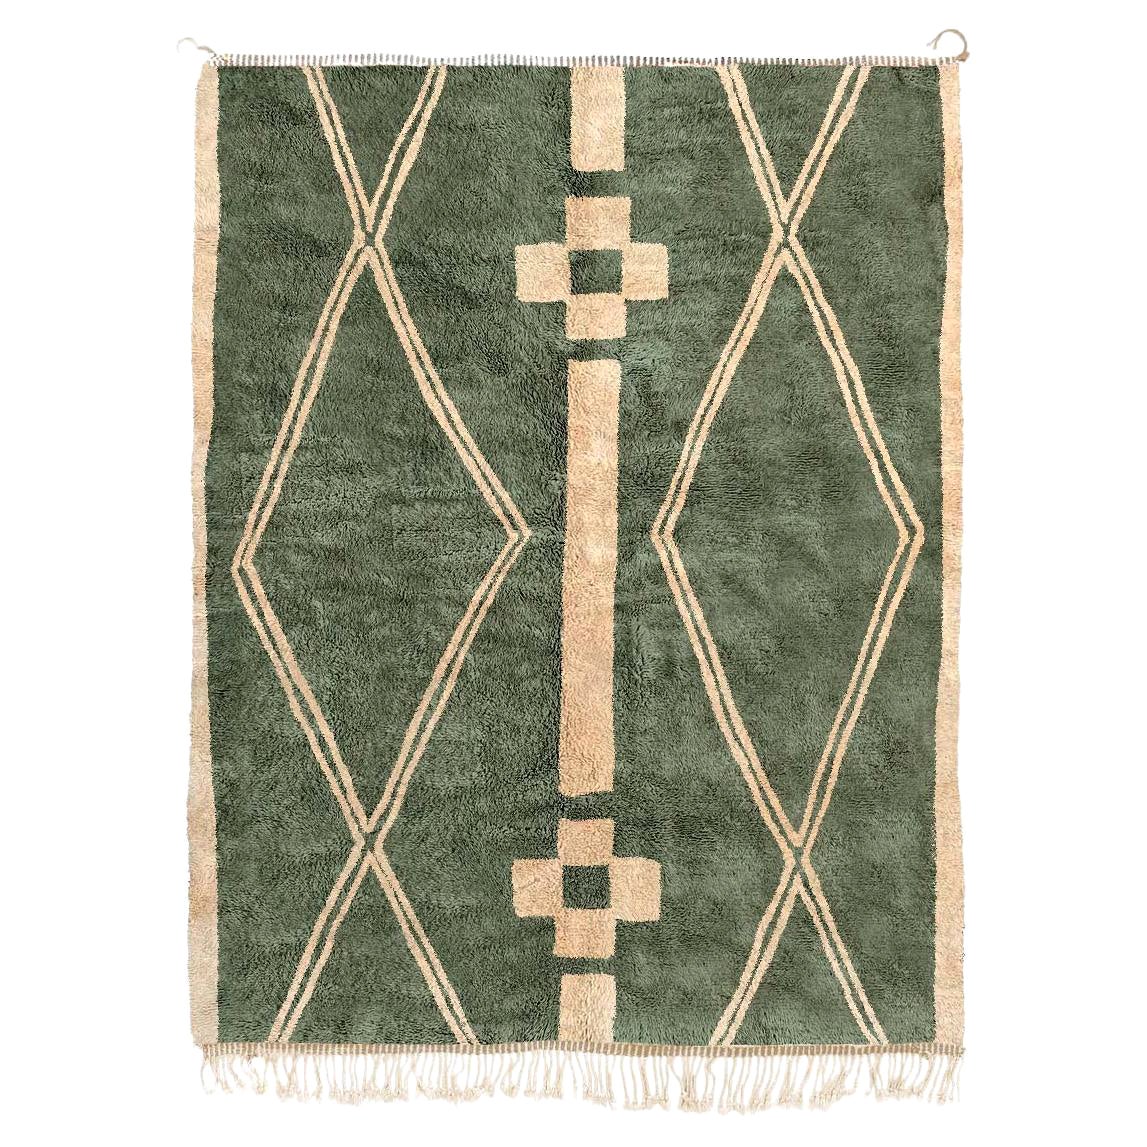 Tapis marocain Beni Mrirt 9'x12', motif tribal tapis de couleur vert shag, fait sur mesure